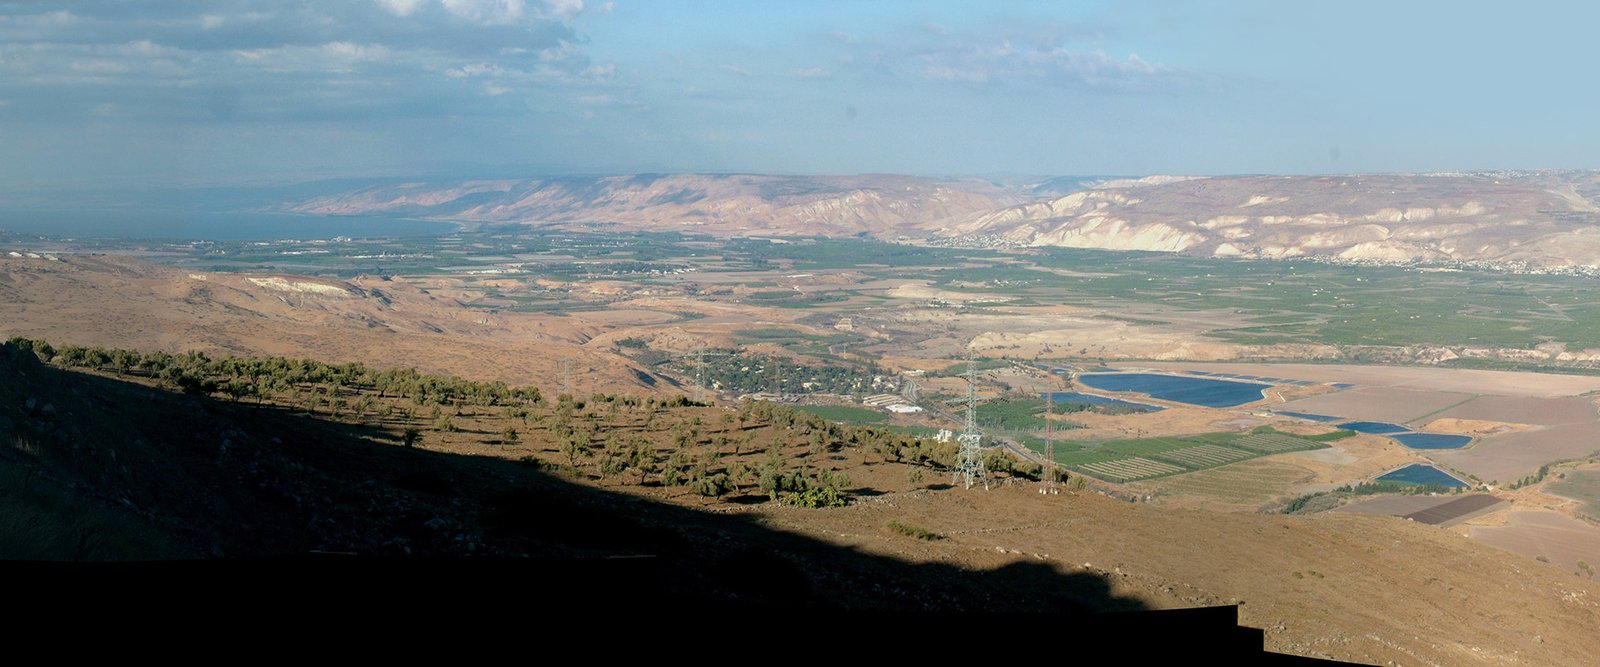 gilboa-and-jordan-valley-panorama2